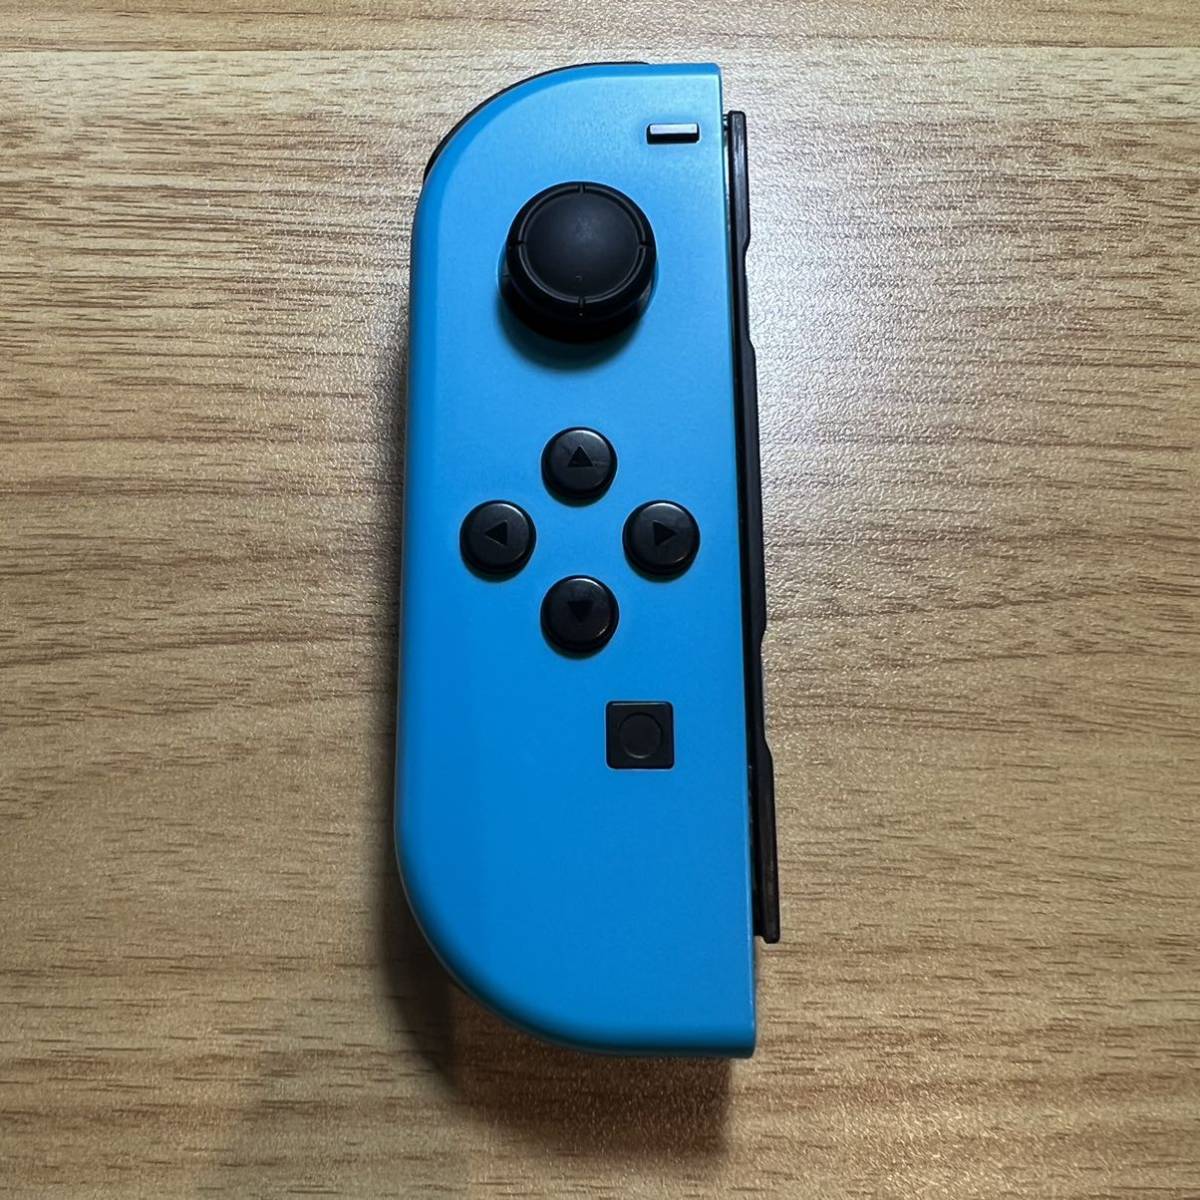 L8993 Nintendo Switch ジョイコン Joy-Con 左 ( L ) 任天堂 ネオンブルー 動作確認済み 保証あり